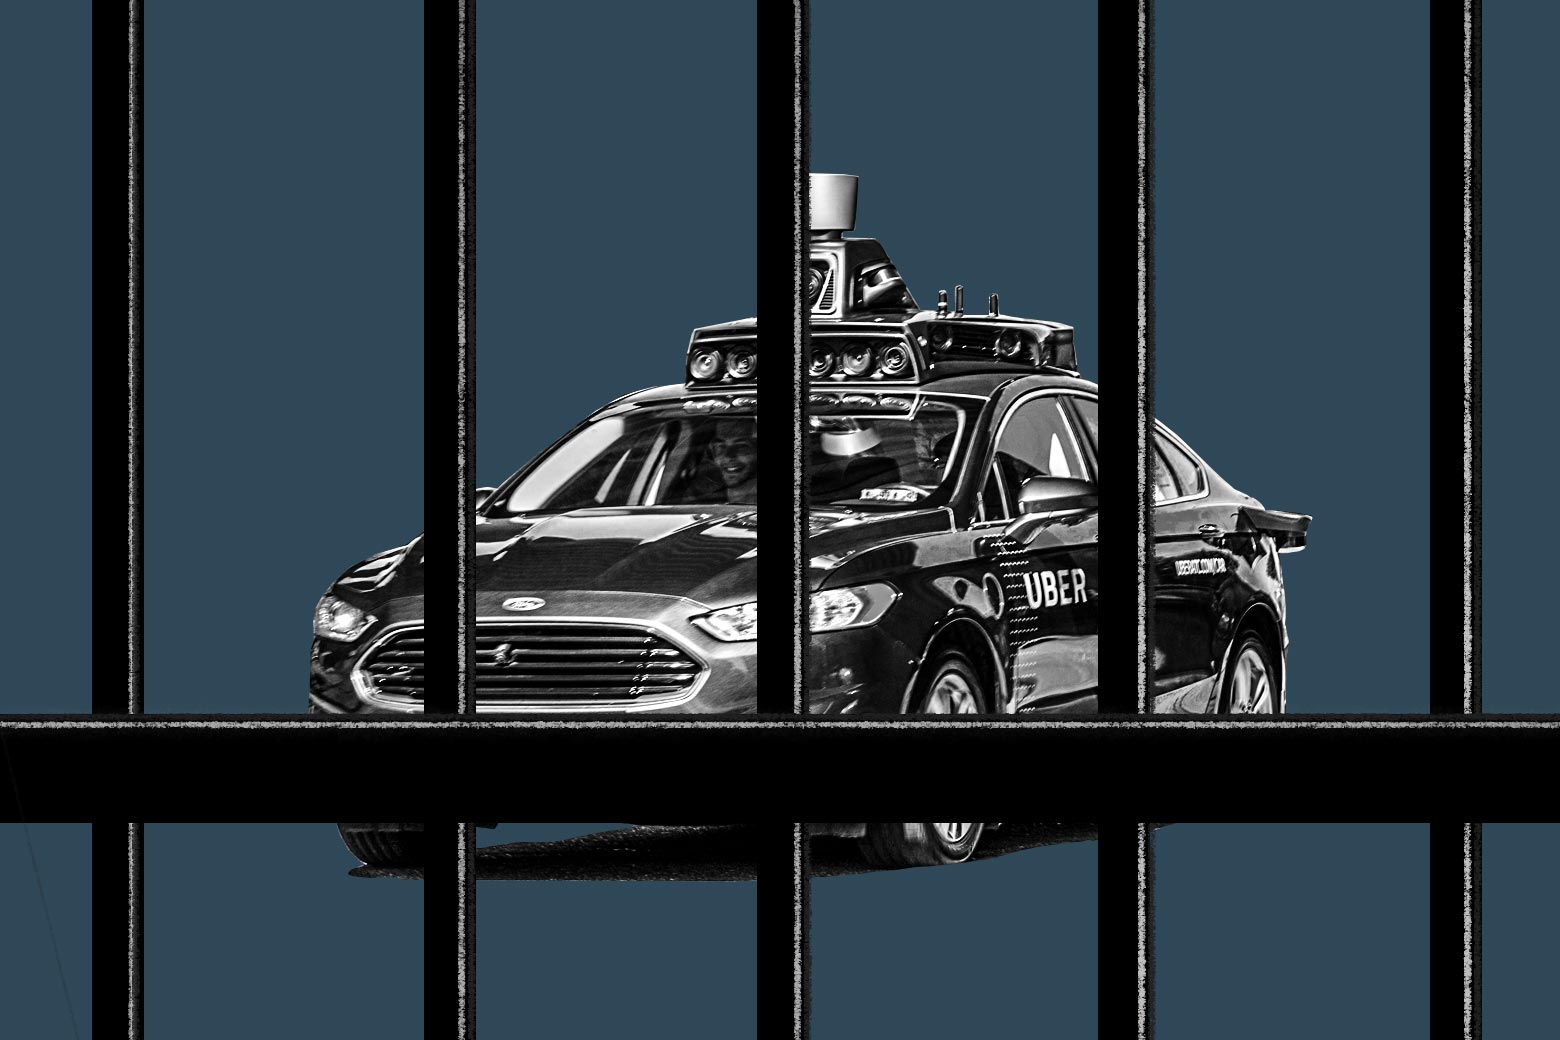 An Uber car behind prison bars